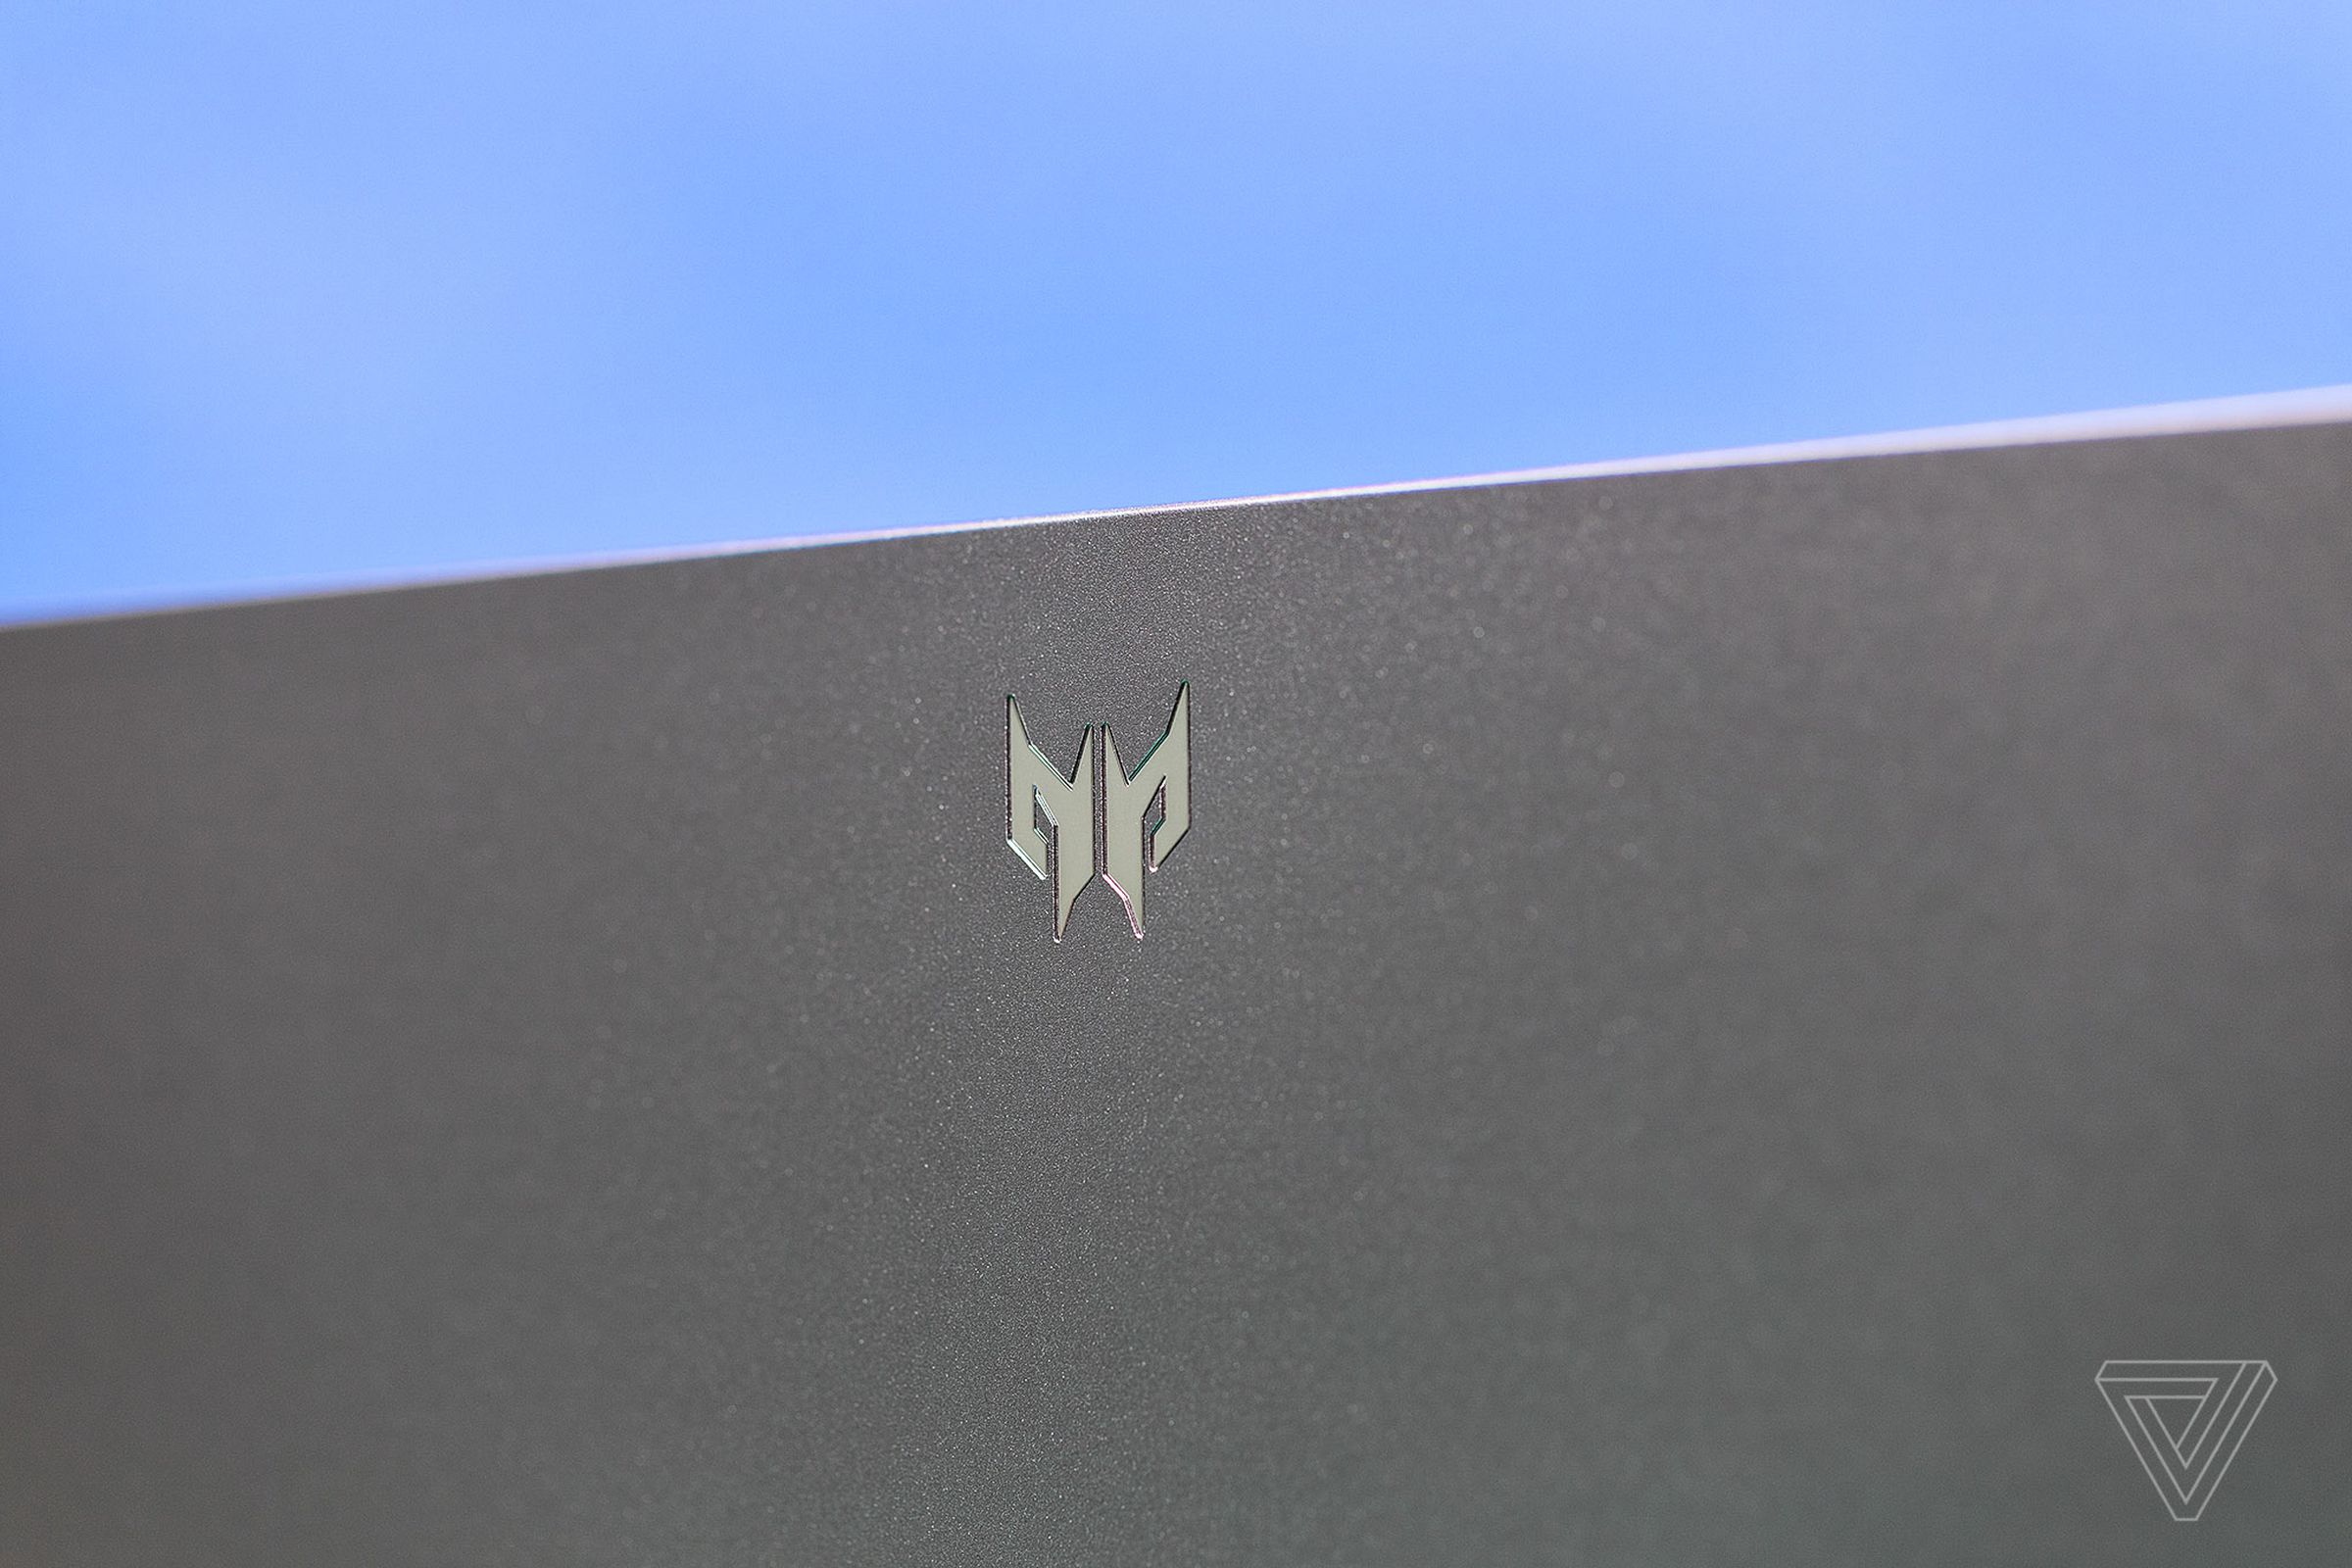 A close-up photo detailing the Predator logo on the lid of the Acer Predator Triton 500 SE